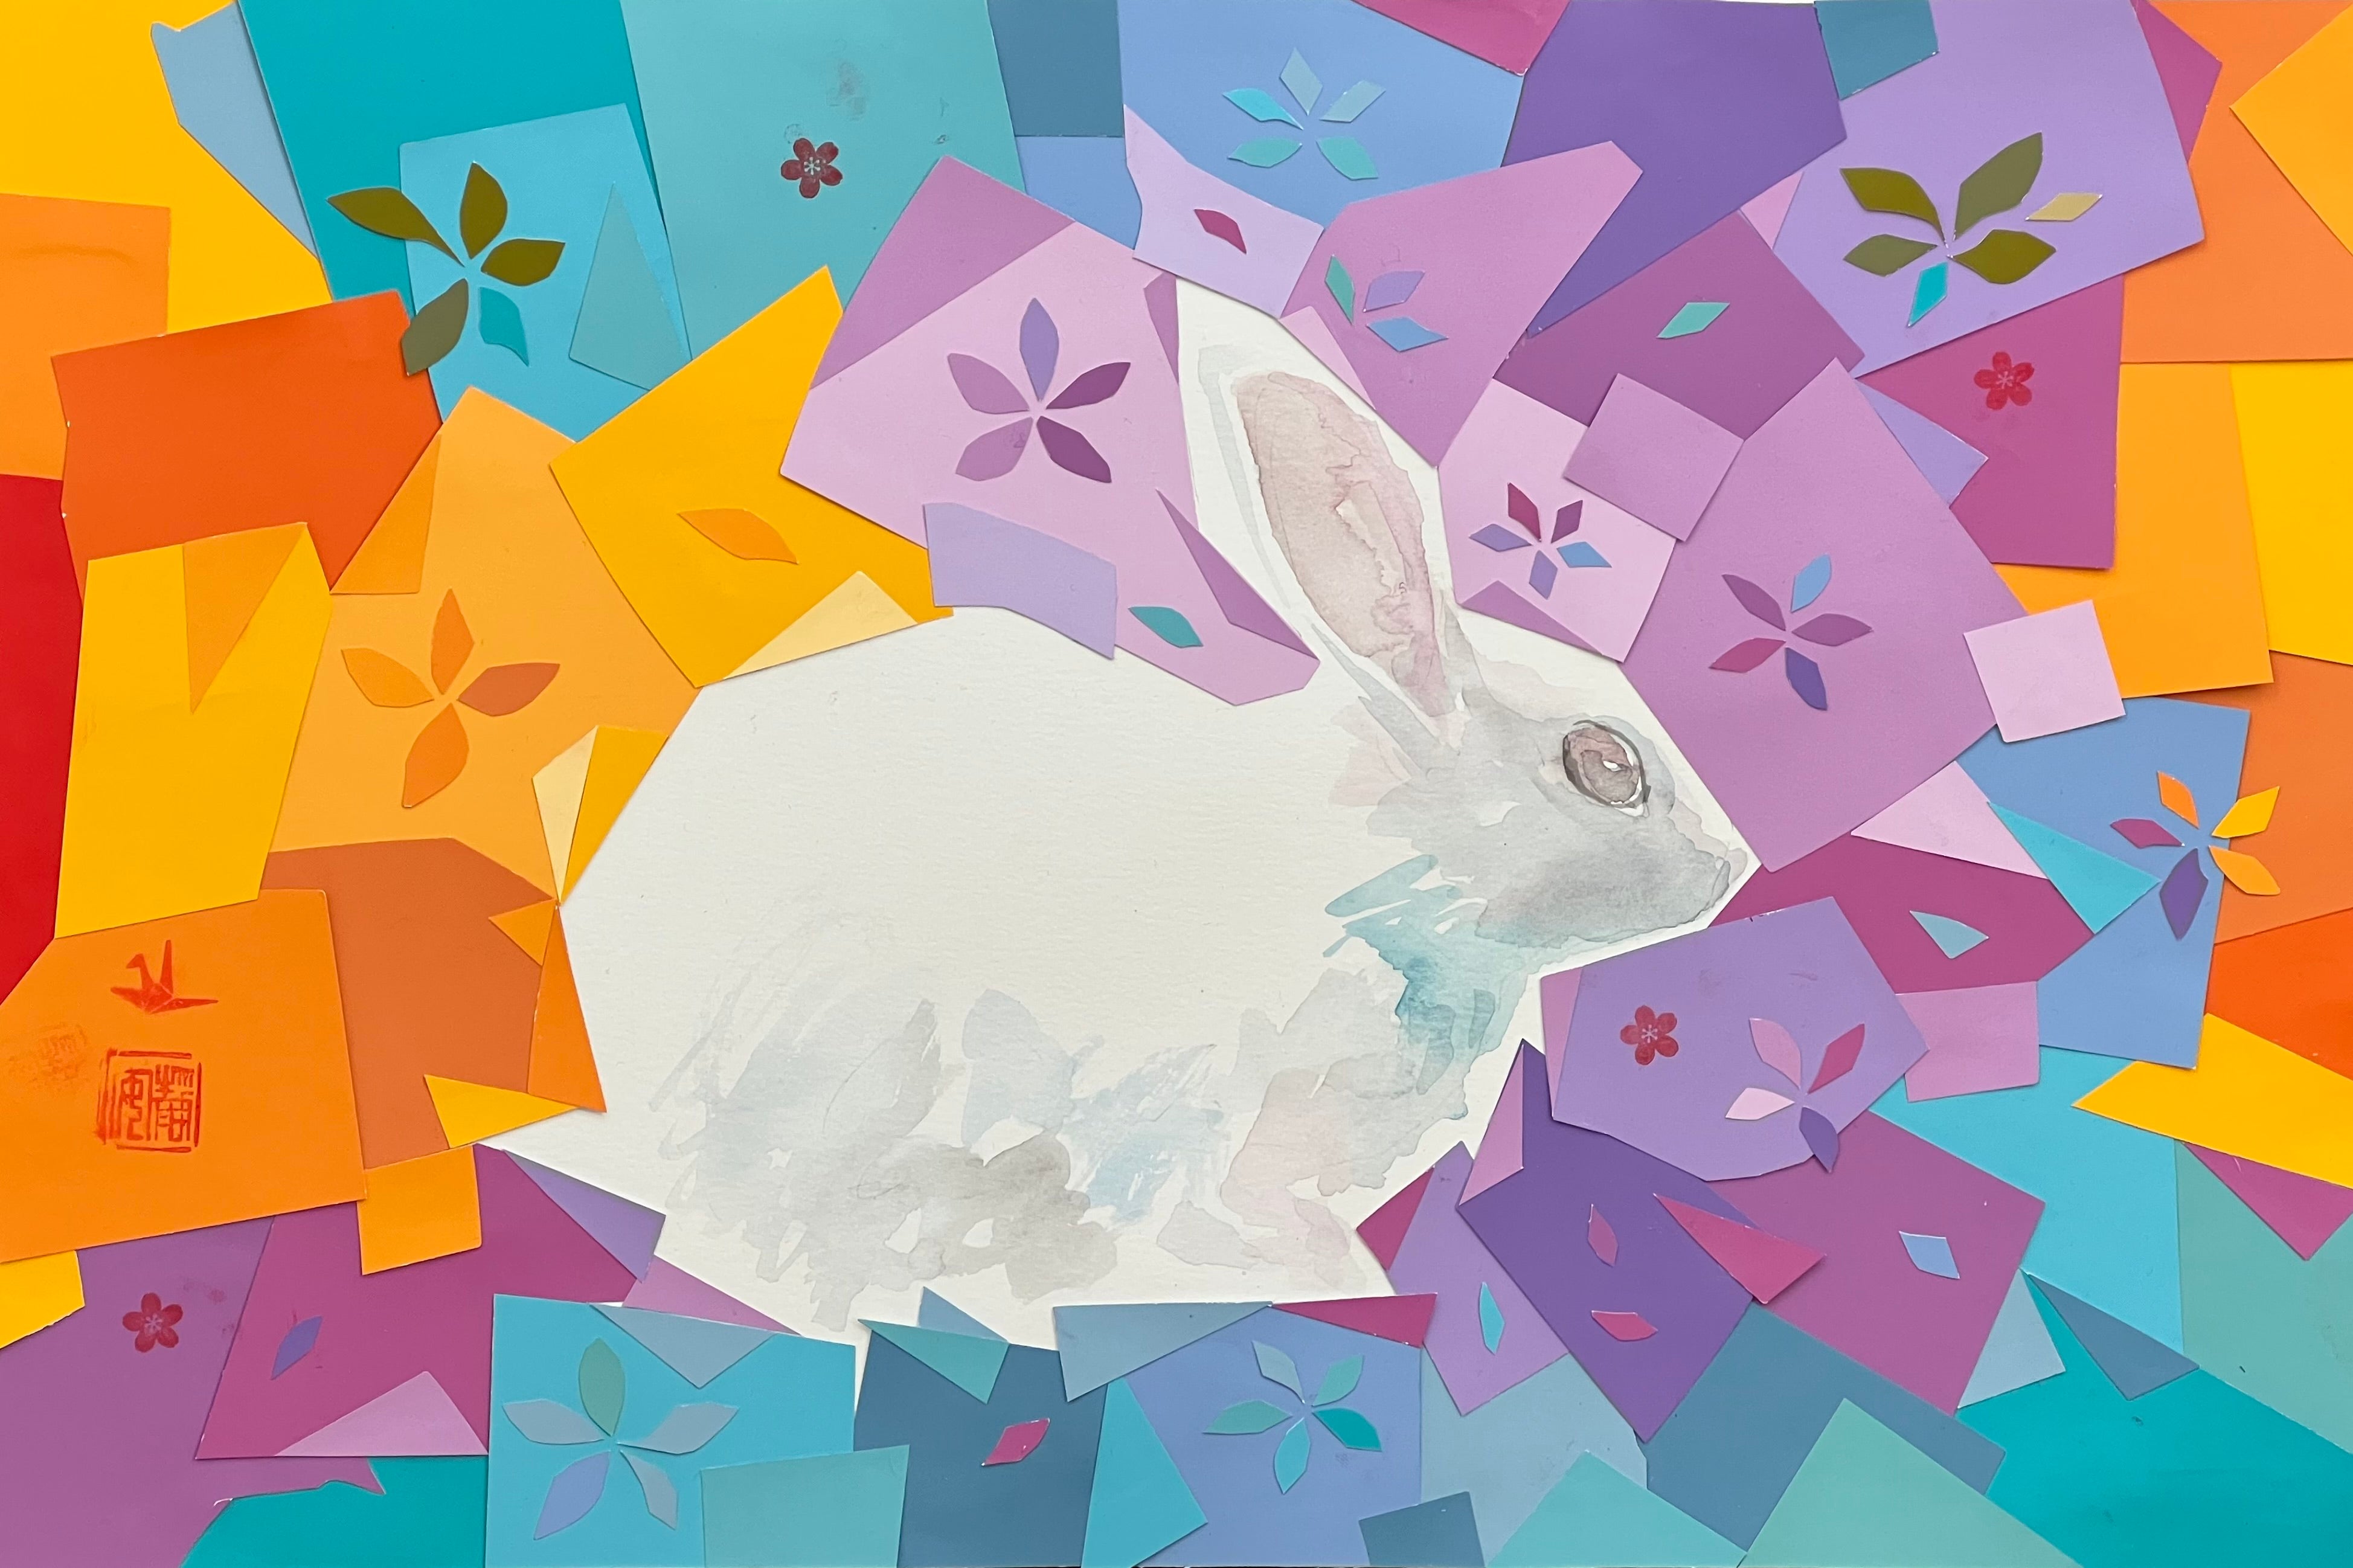 David Mack Original Art The Year of the Rabbit Zodiac Published Art